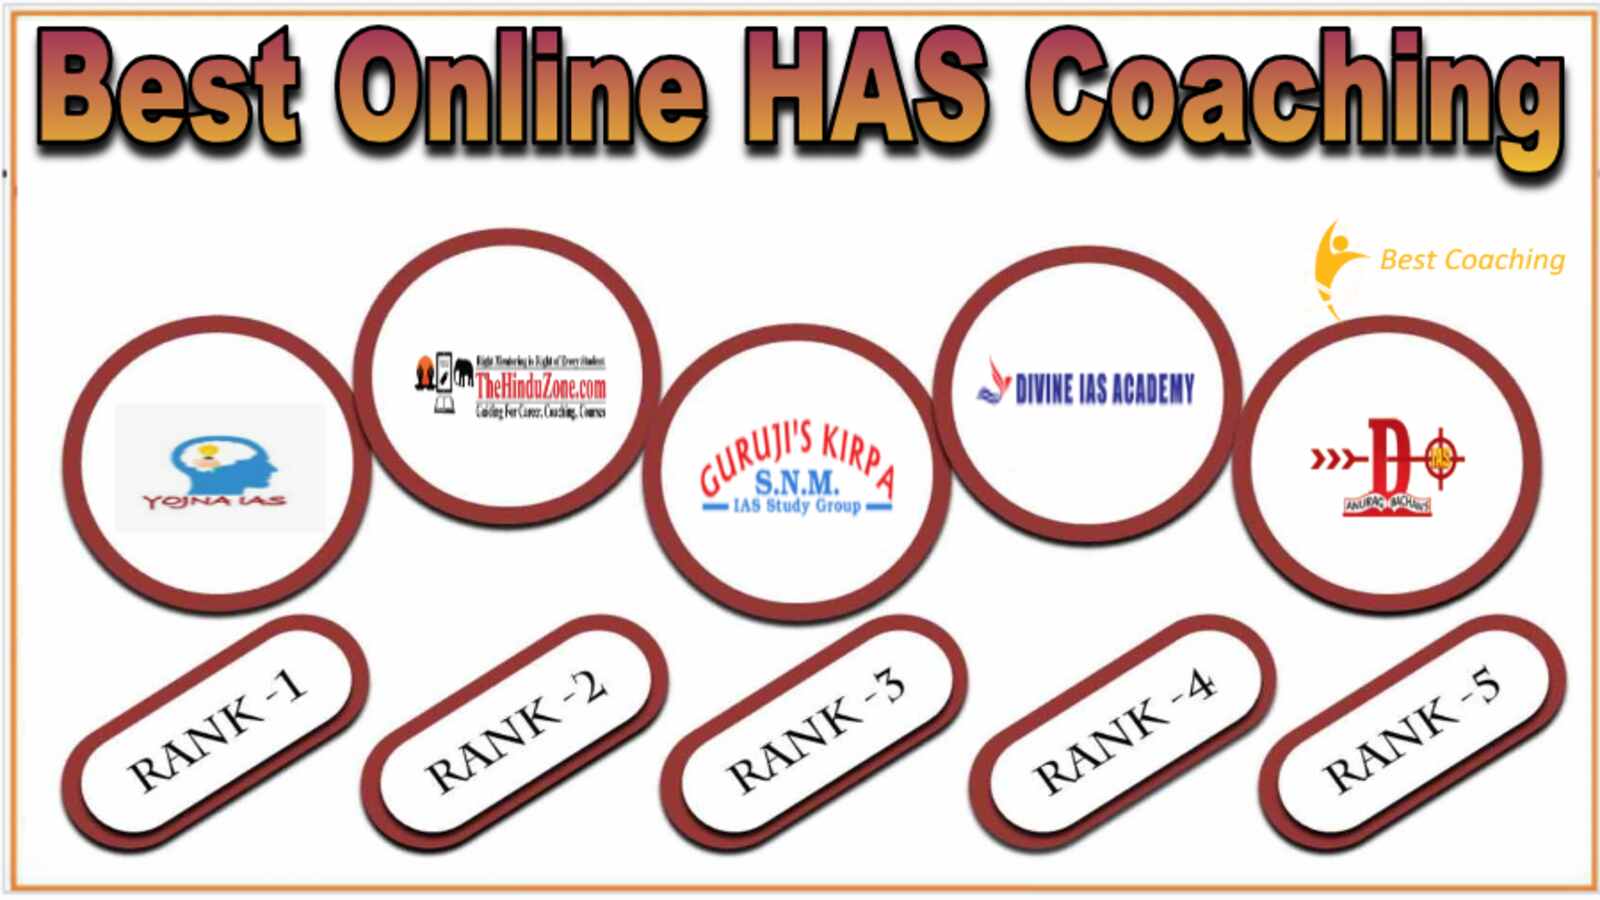 Best Online HAS Coaching